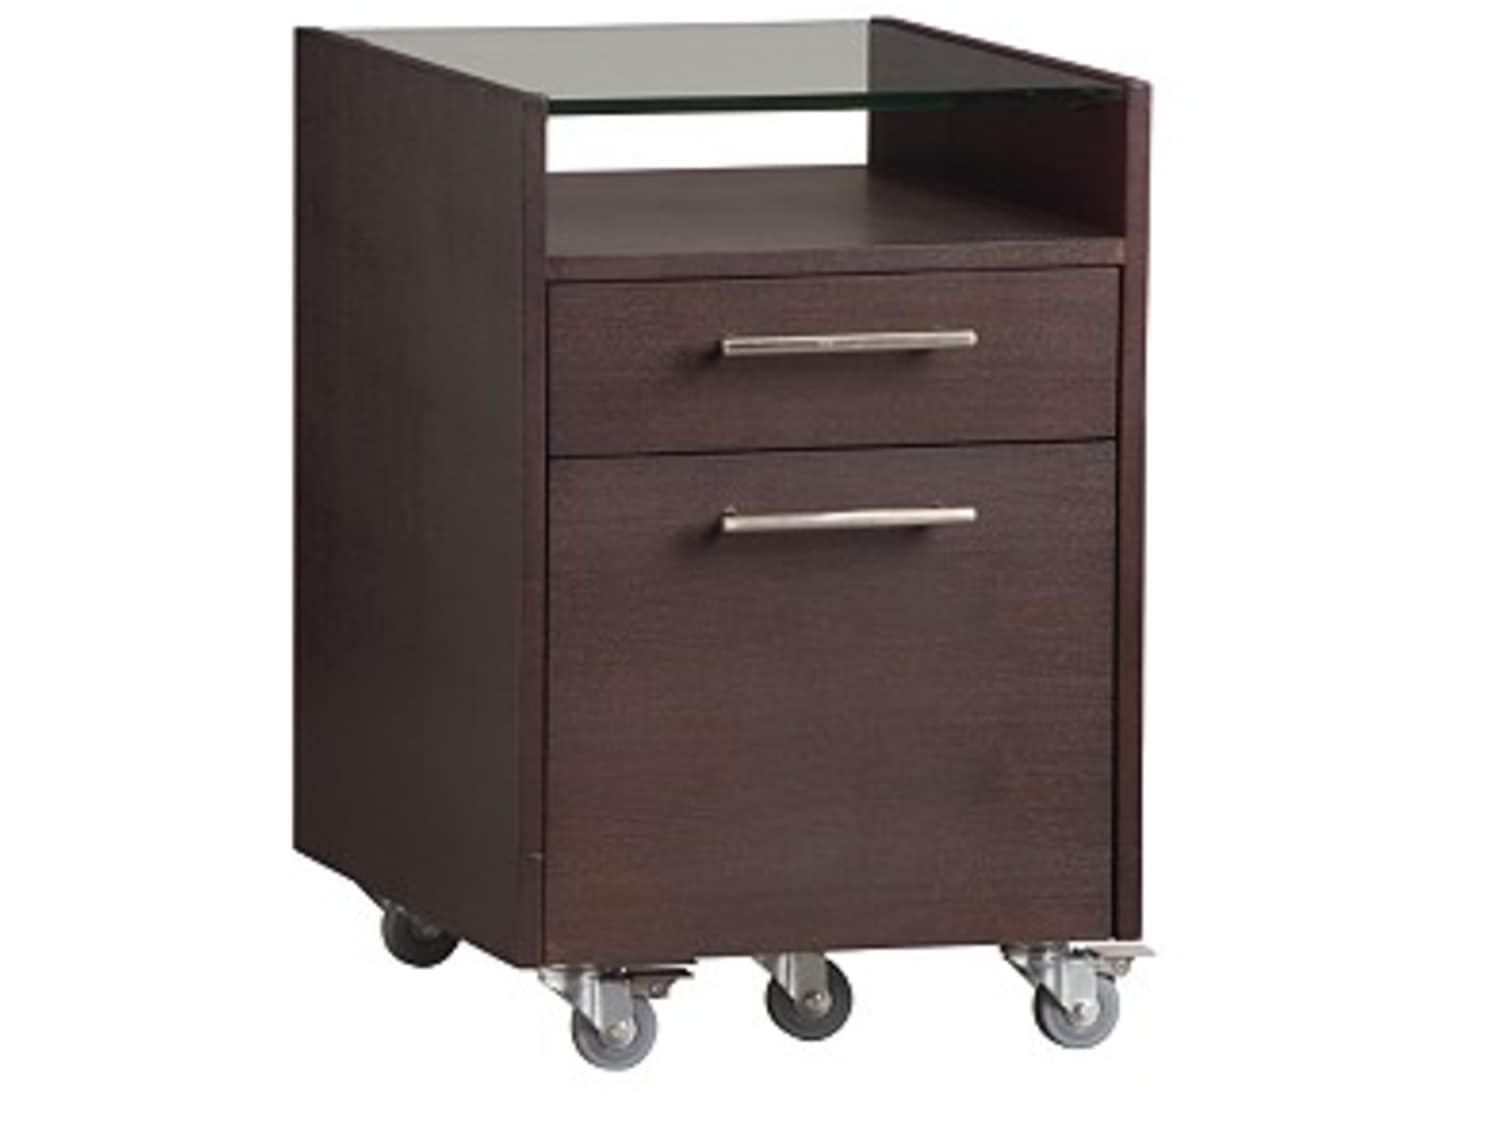 Crate Barrel Walker Desk Incl File Cabinet Apartment